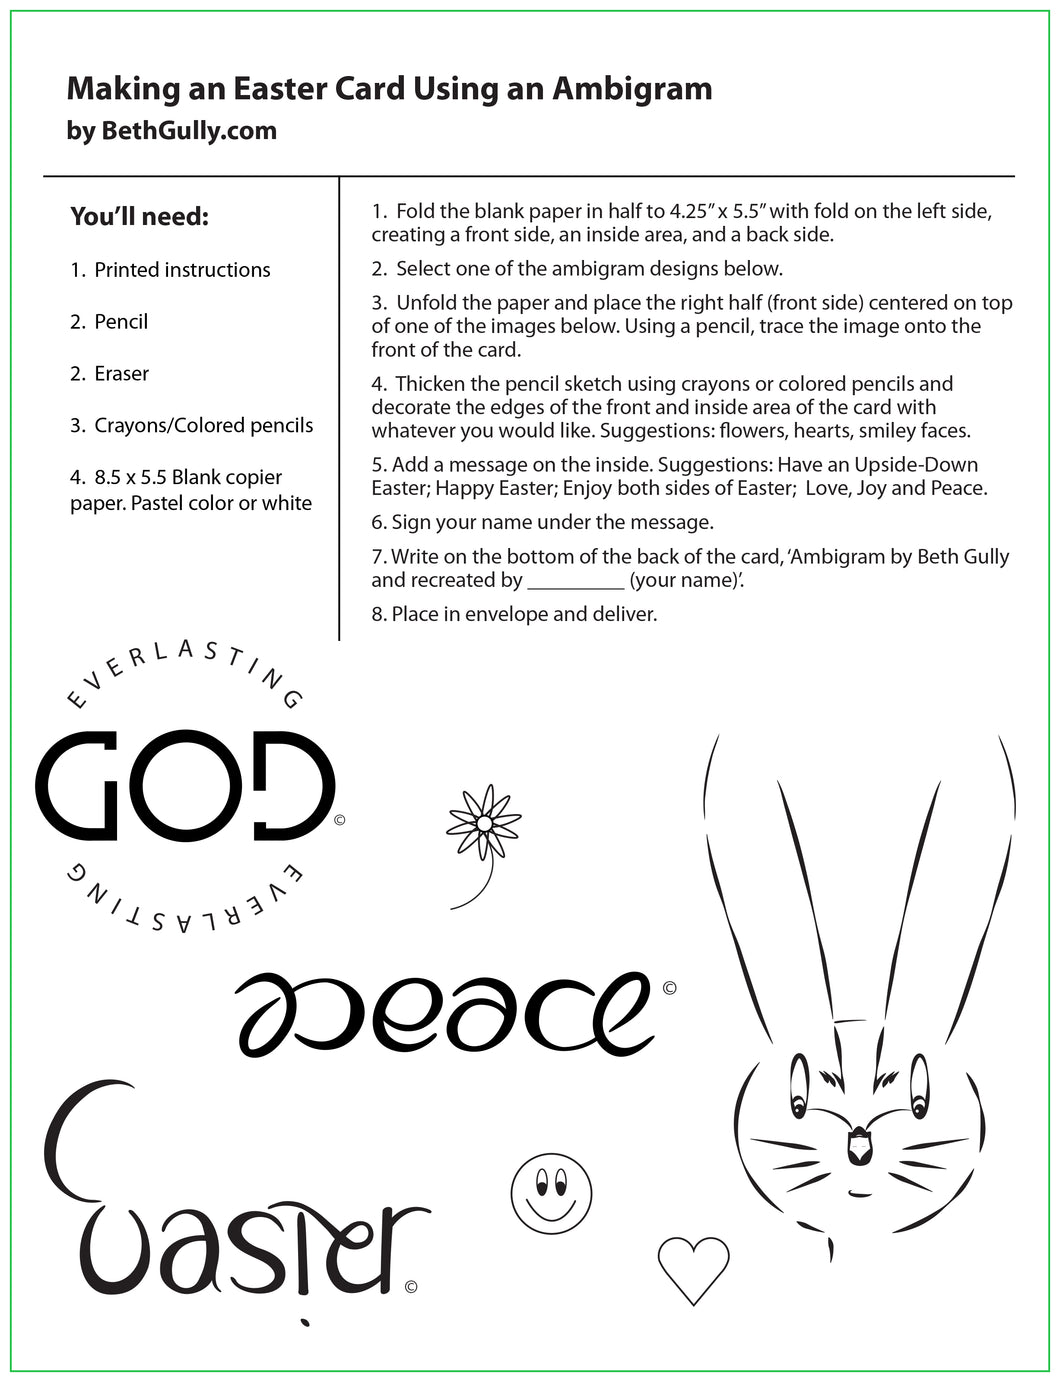 Making an Ambigram Easter Card Worksheet